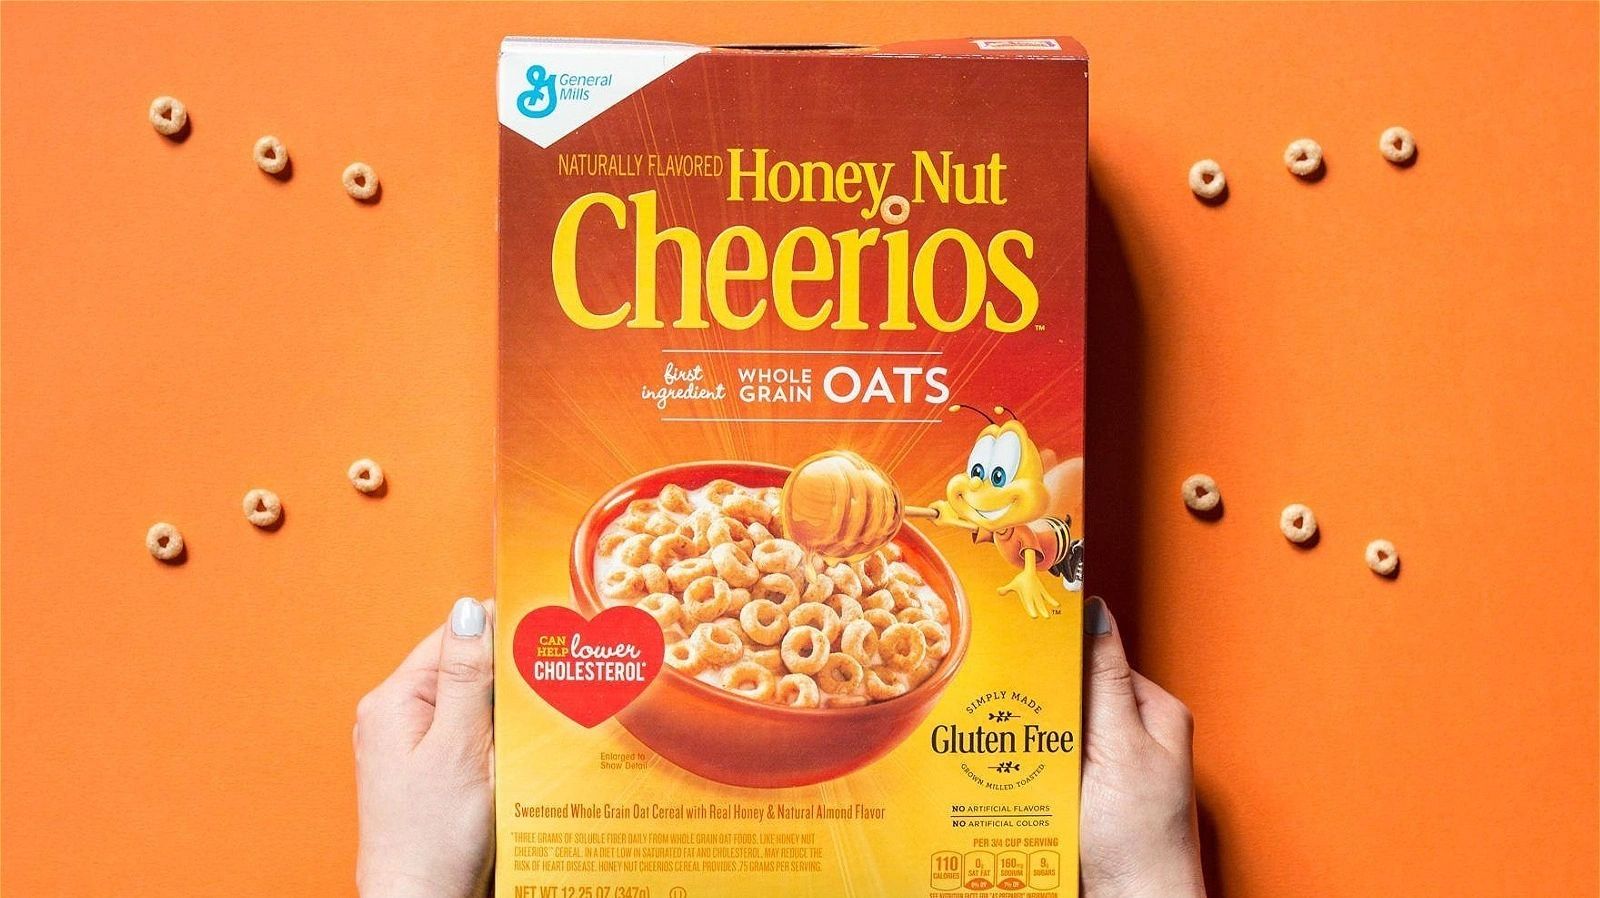 Calories in General Mills Honey Nut Cheerios